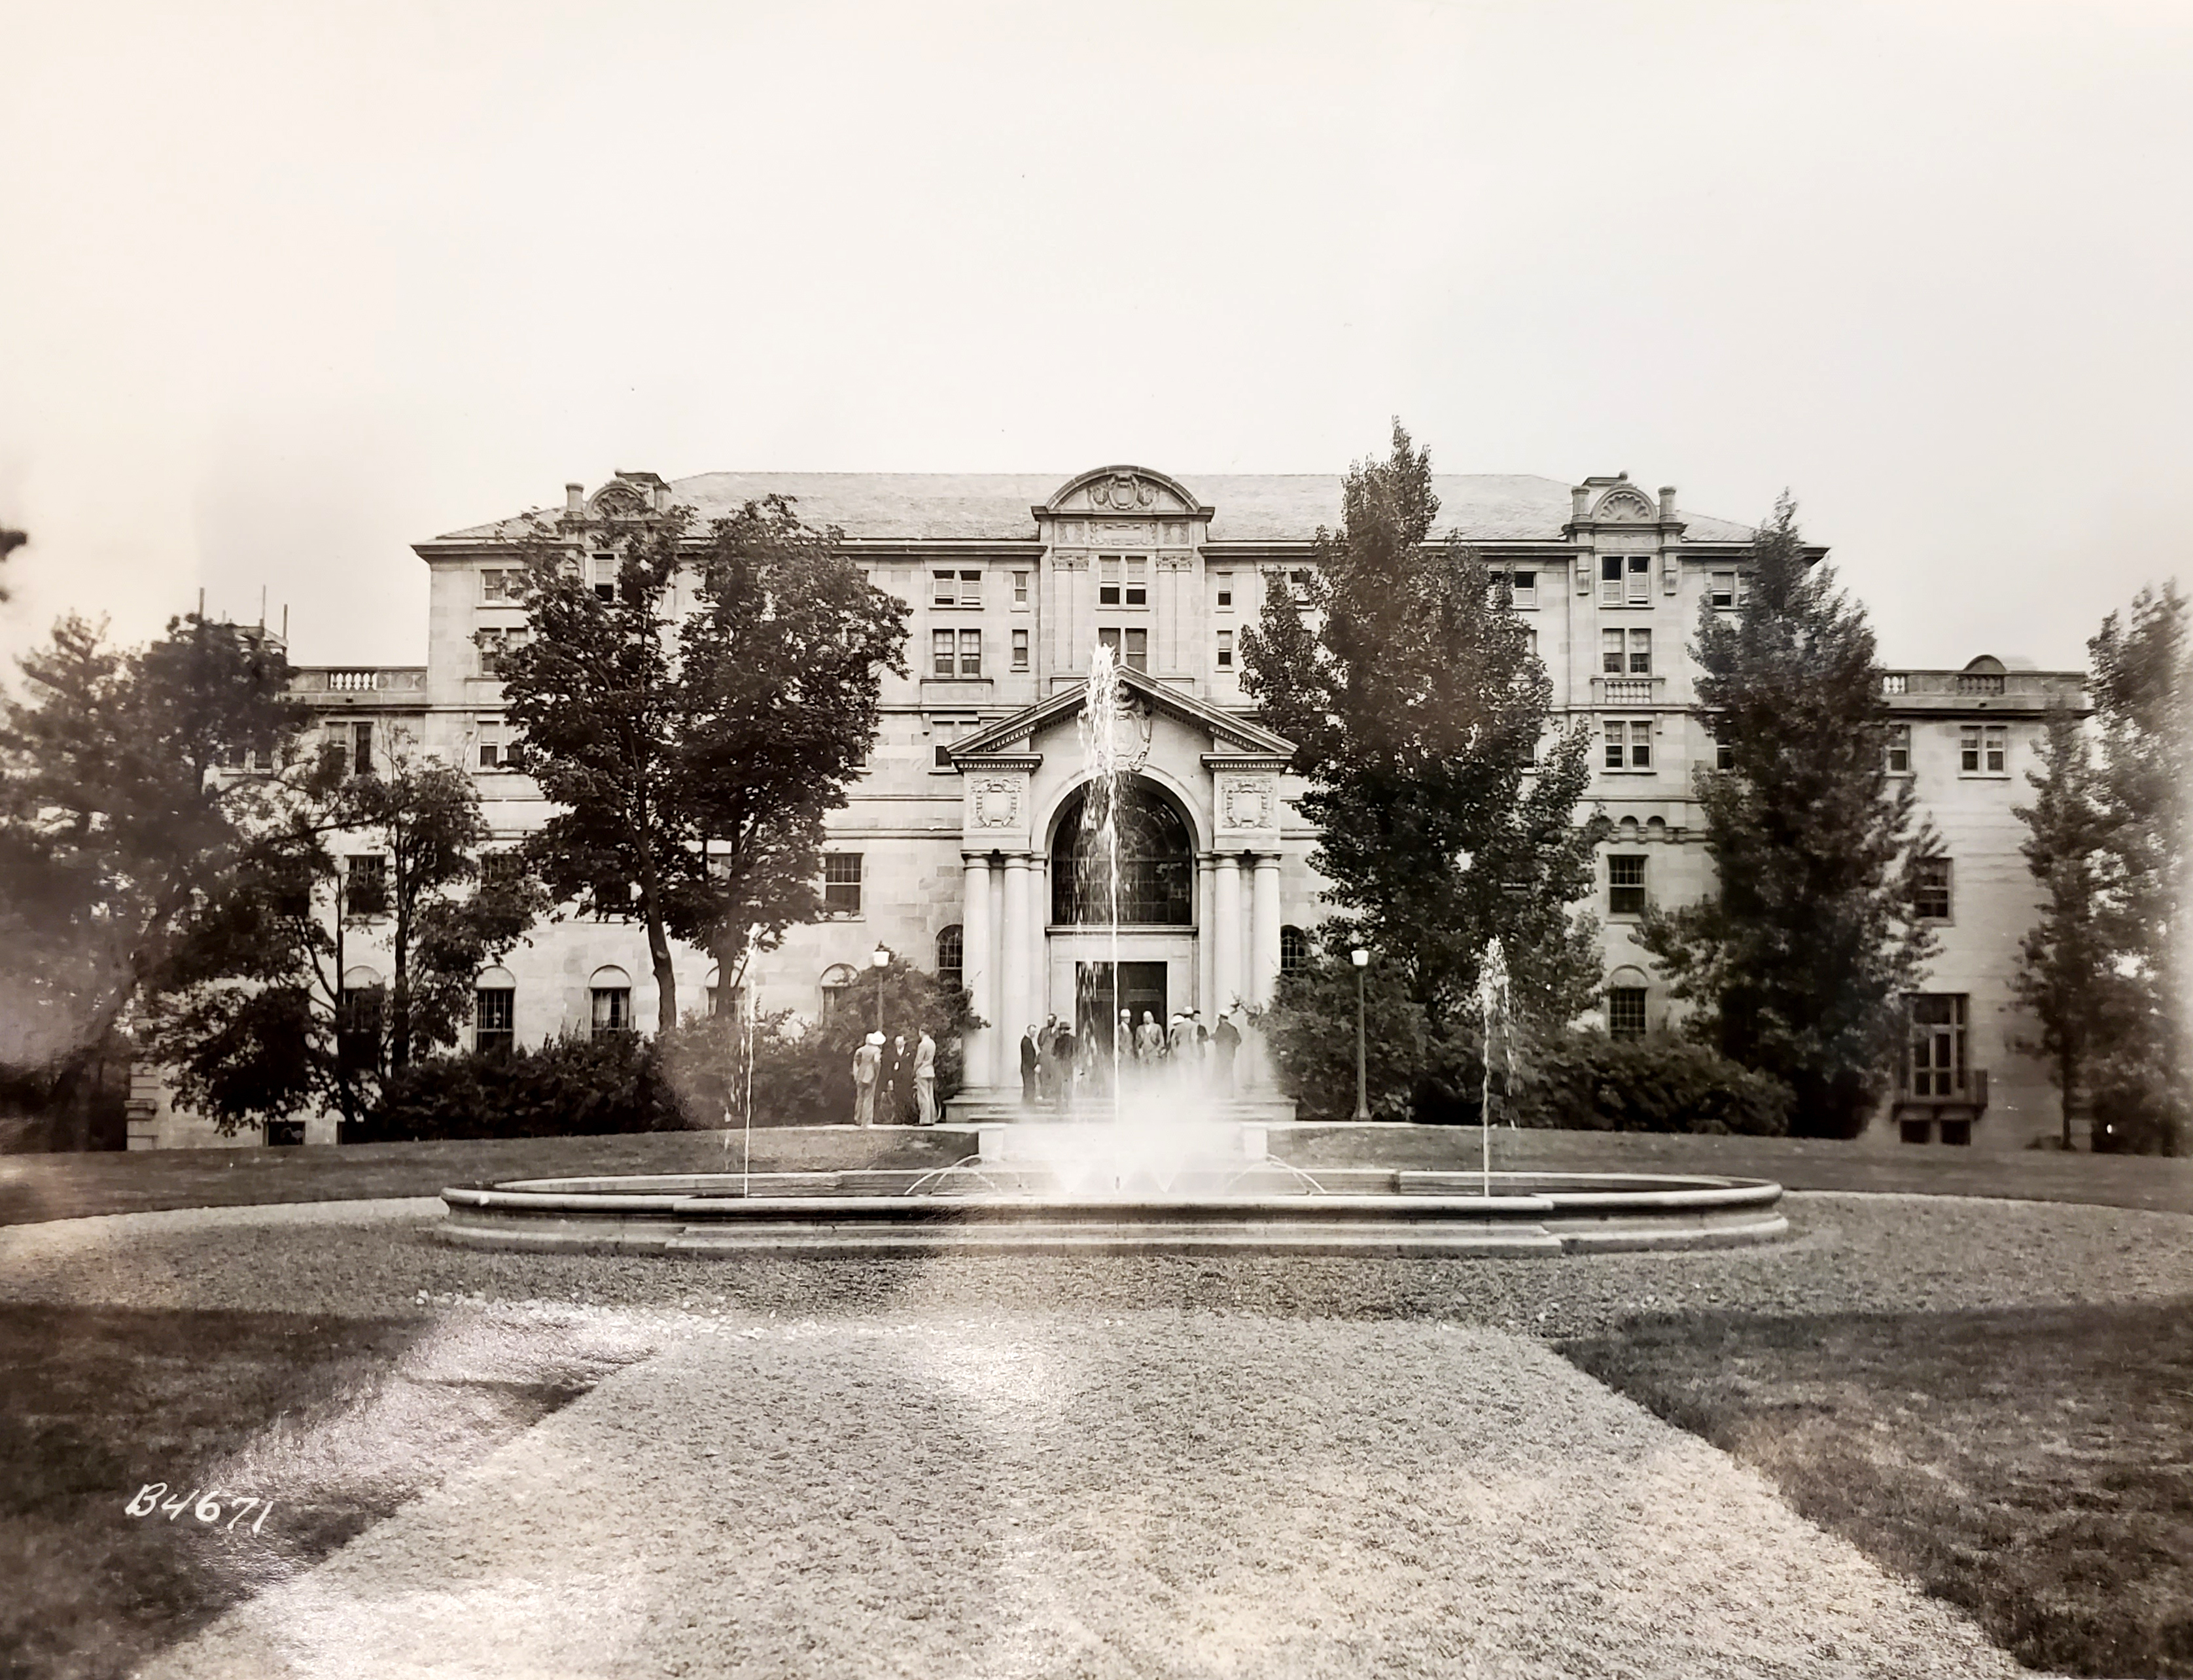 New MU fountain and pool in 1937